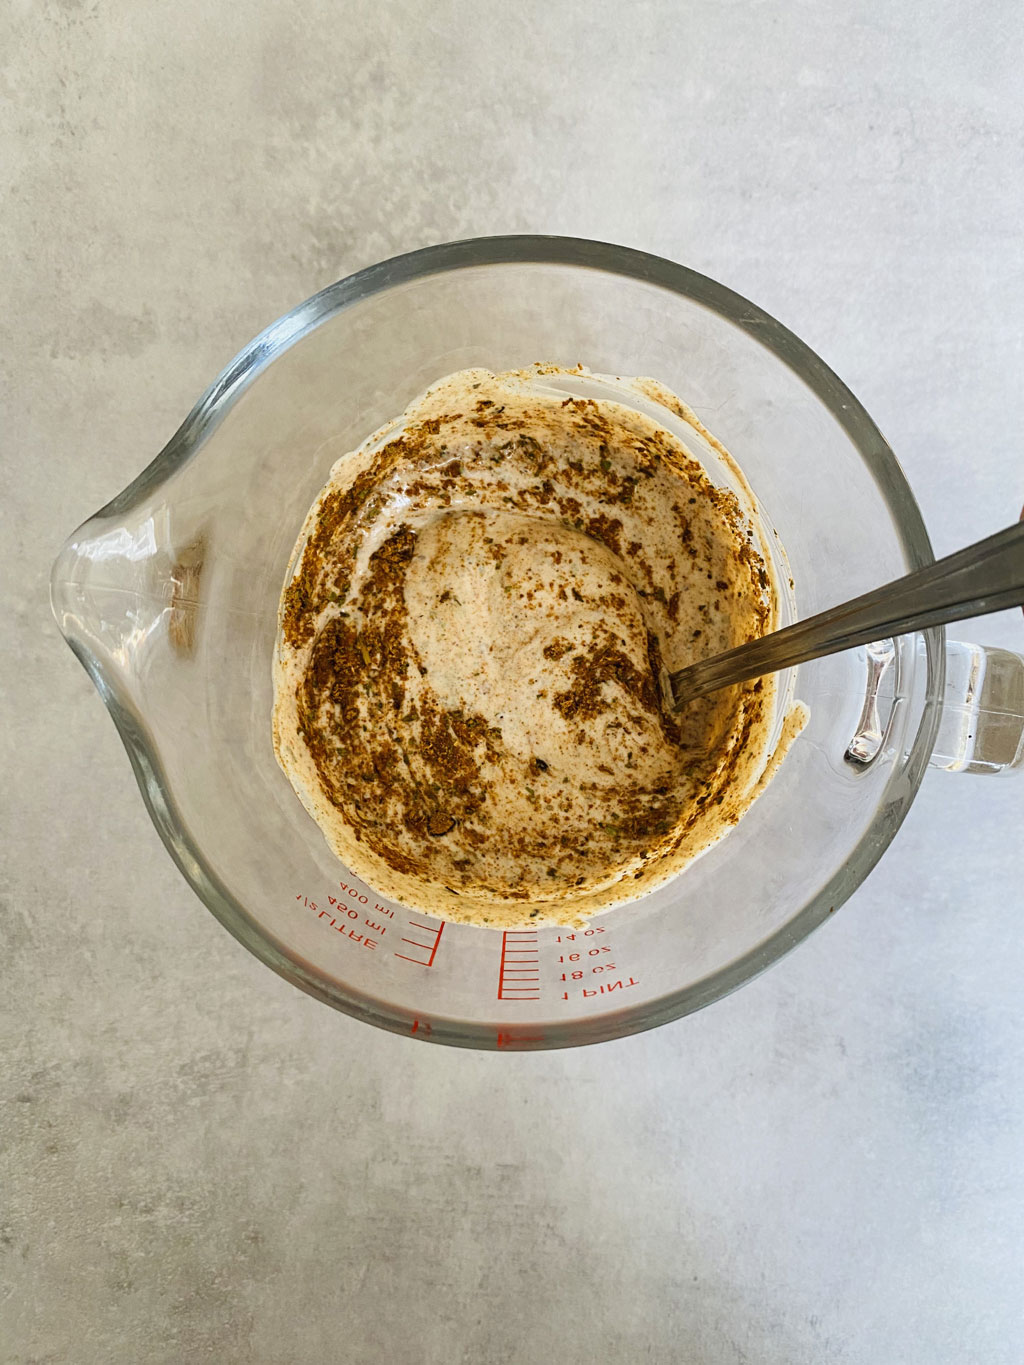 mixing tikka powder in yoghurt for marinade